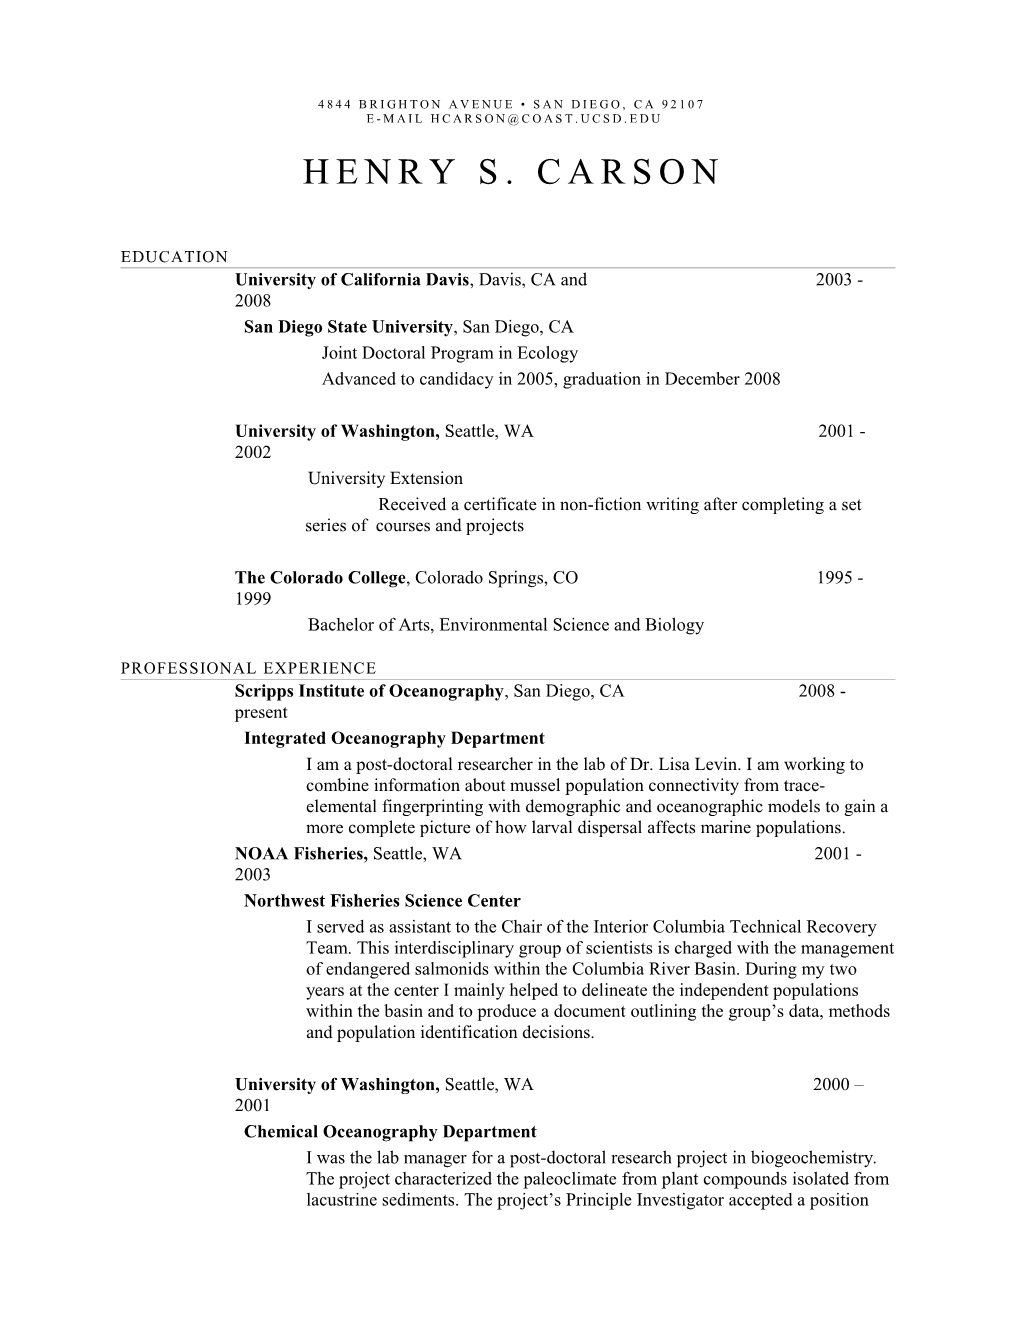 Henry S. Carson